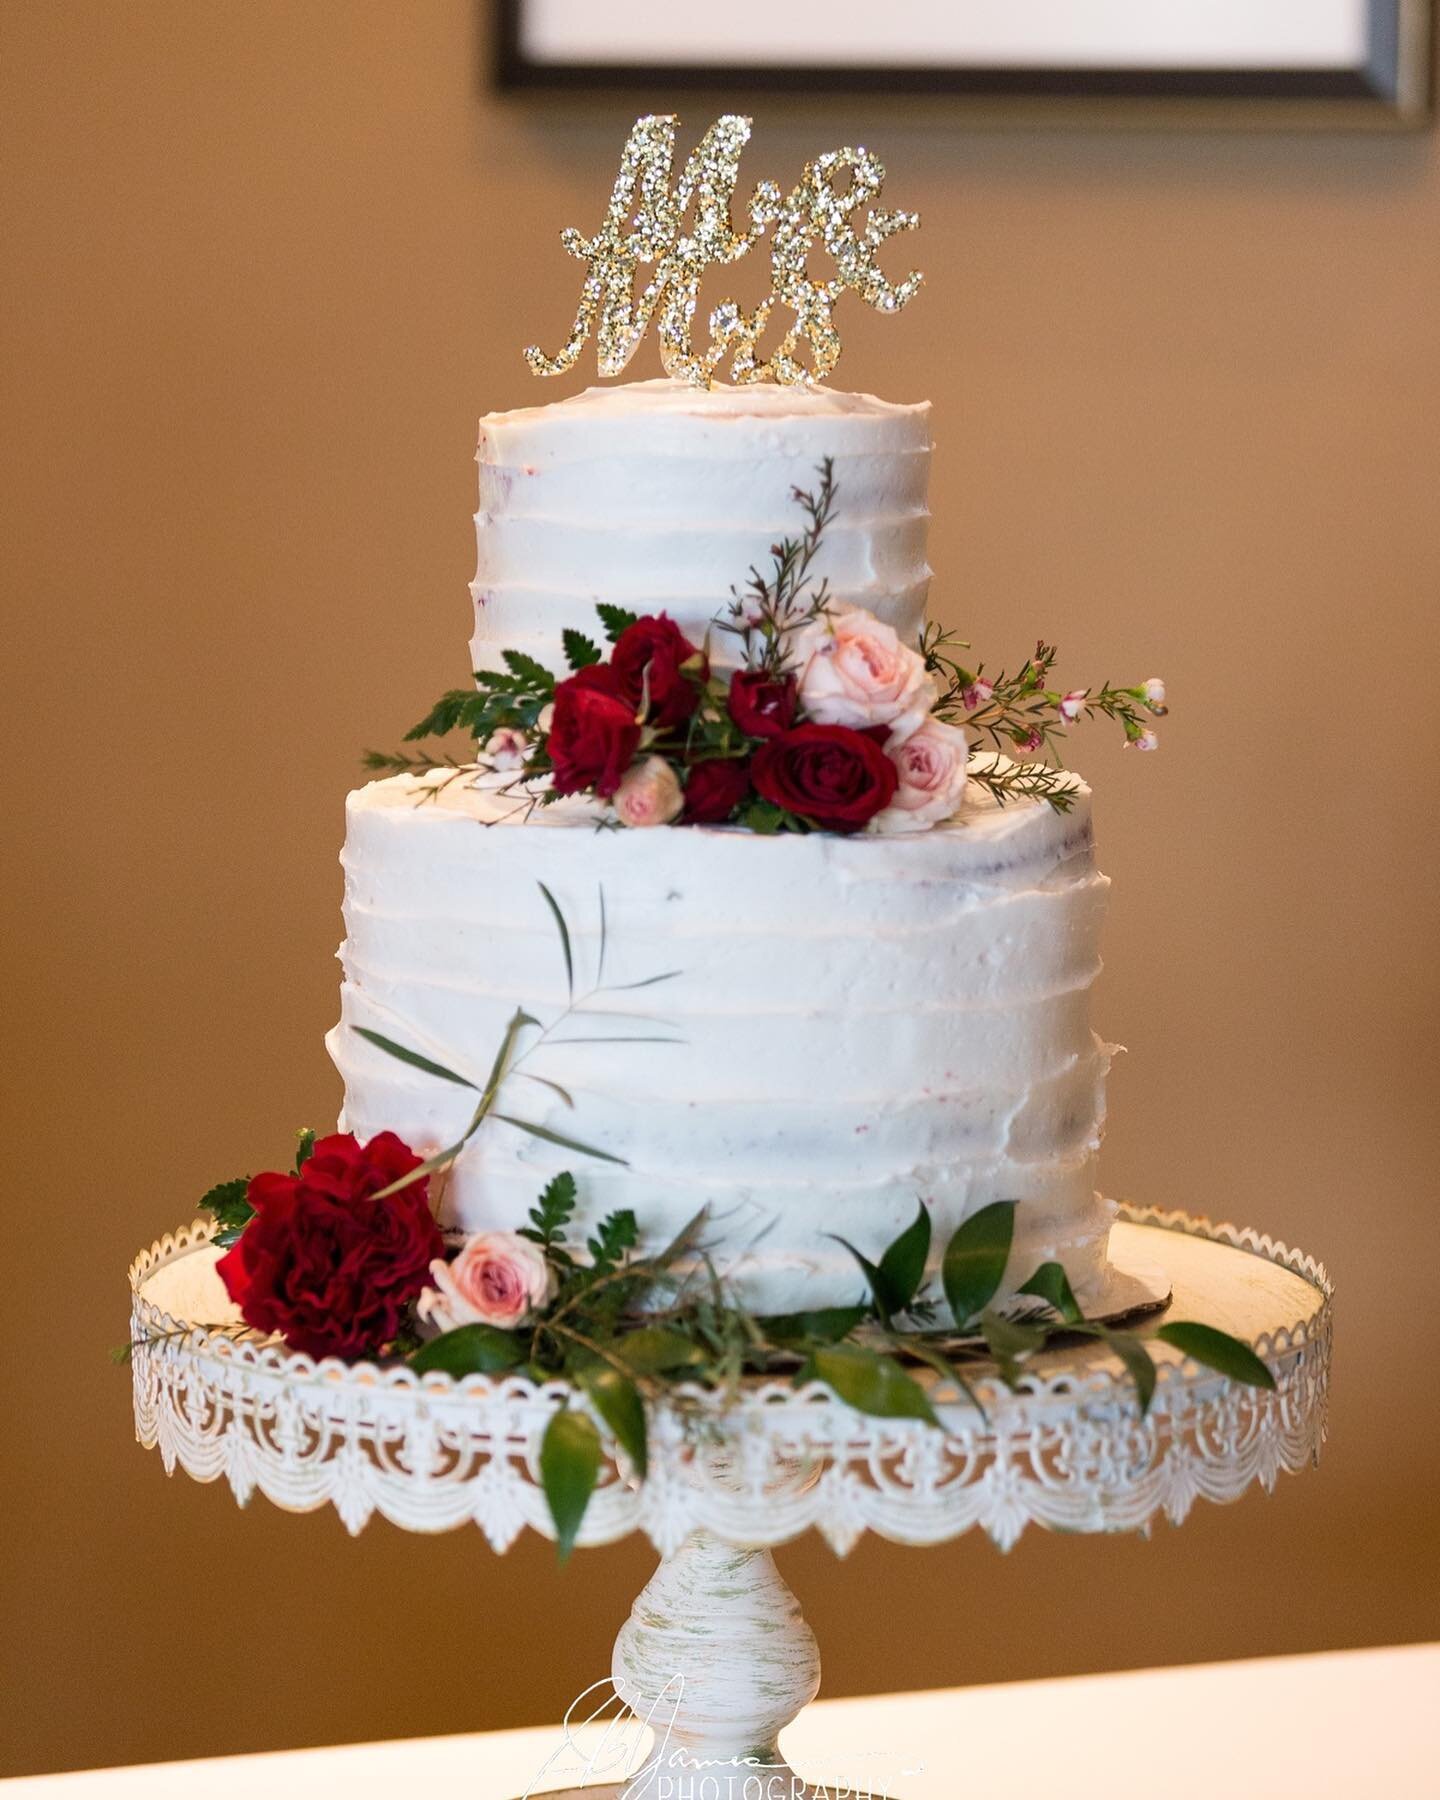 We love wedding cake!